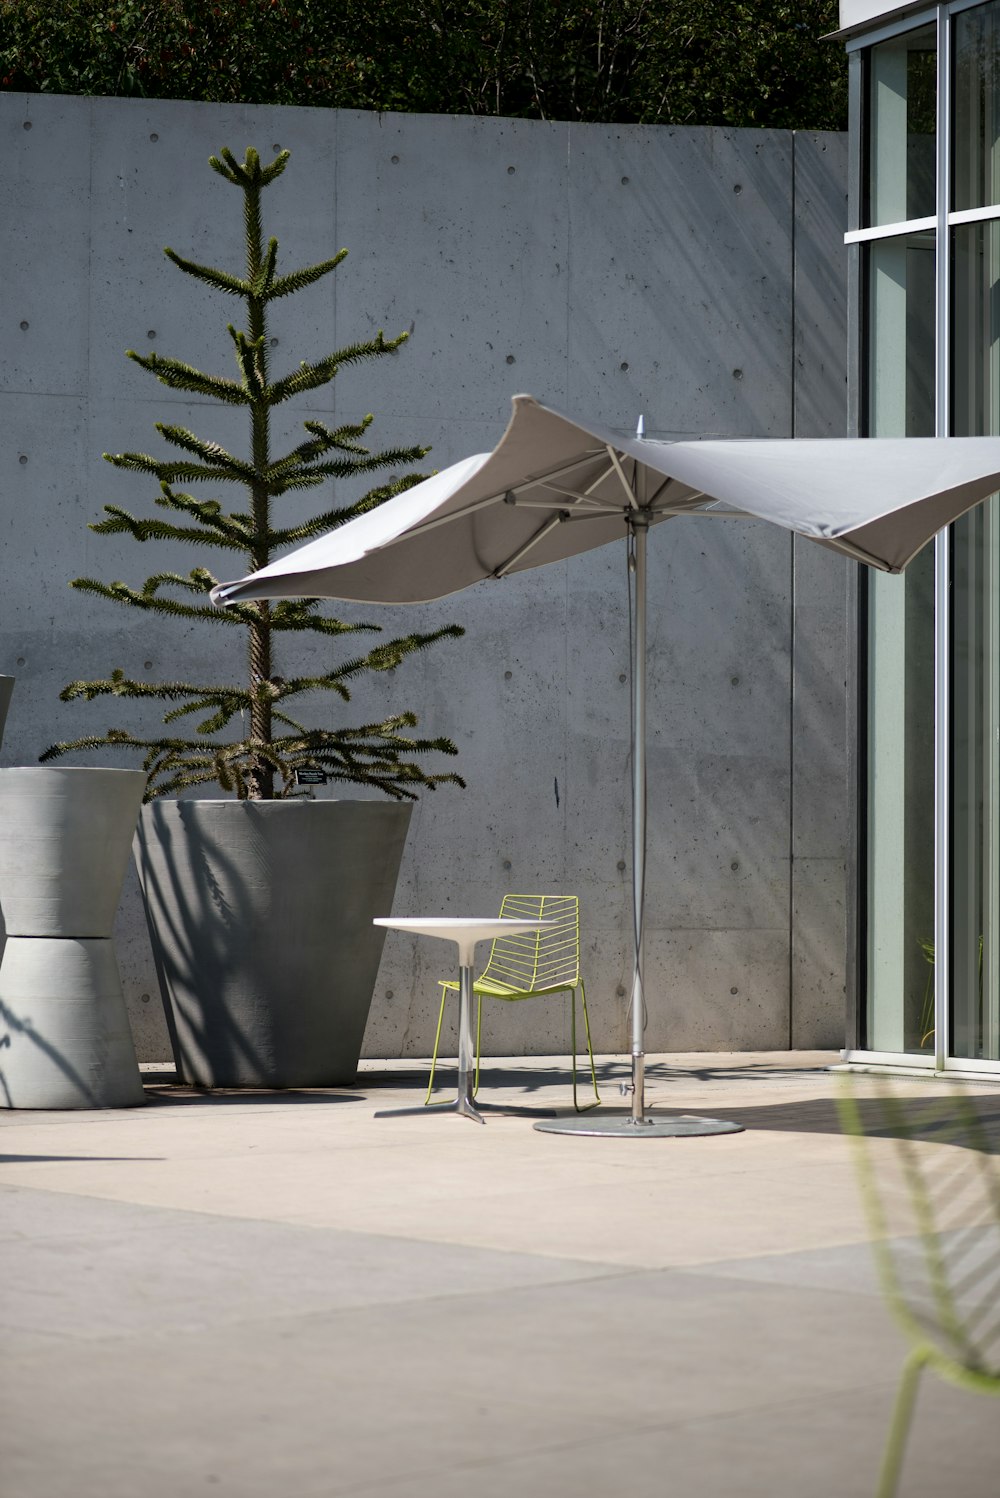 gray patio umbrella beside green pine tree